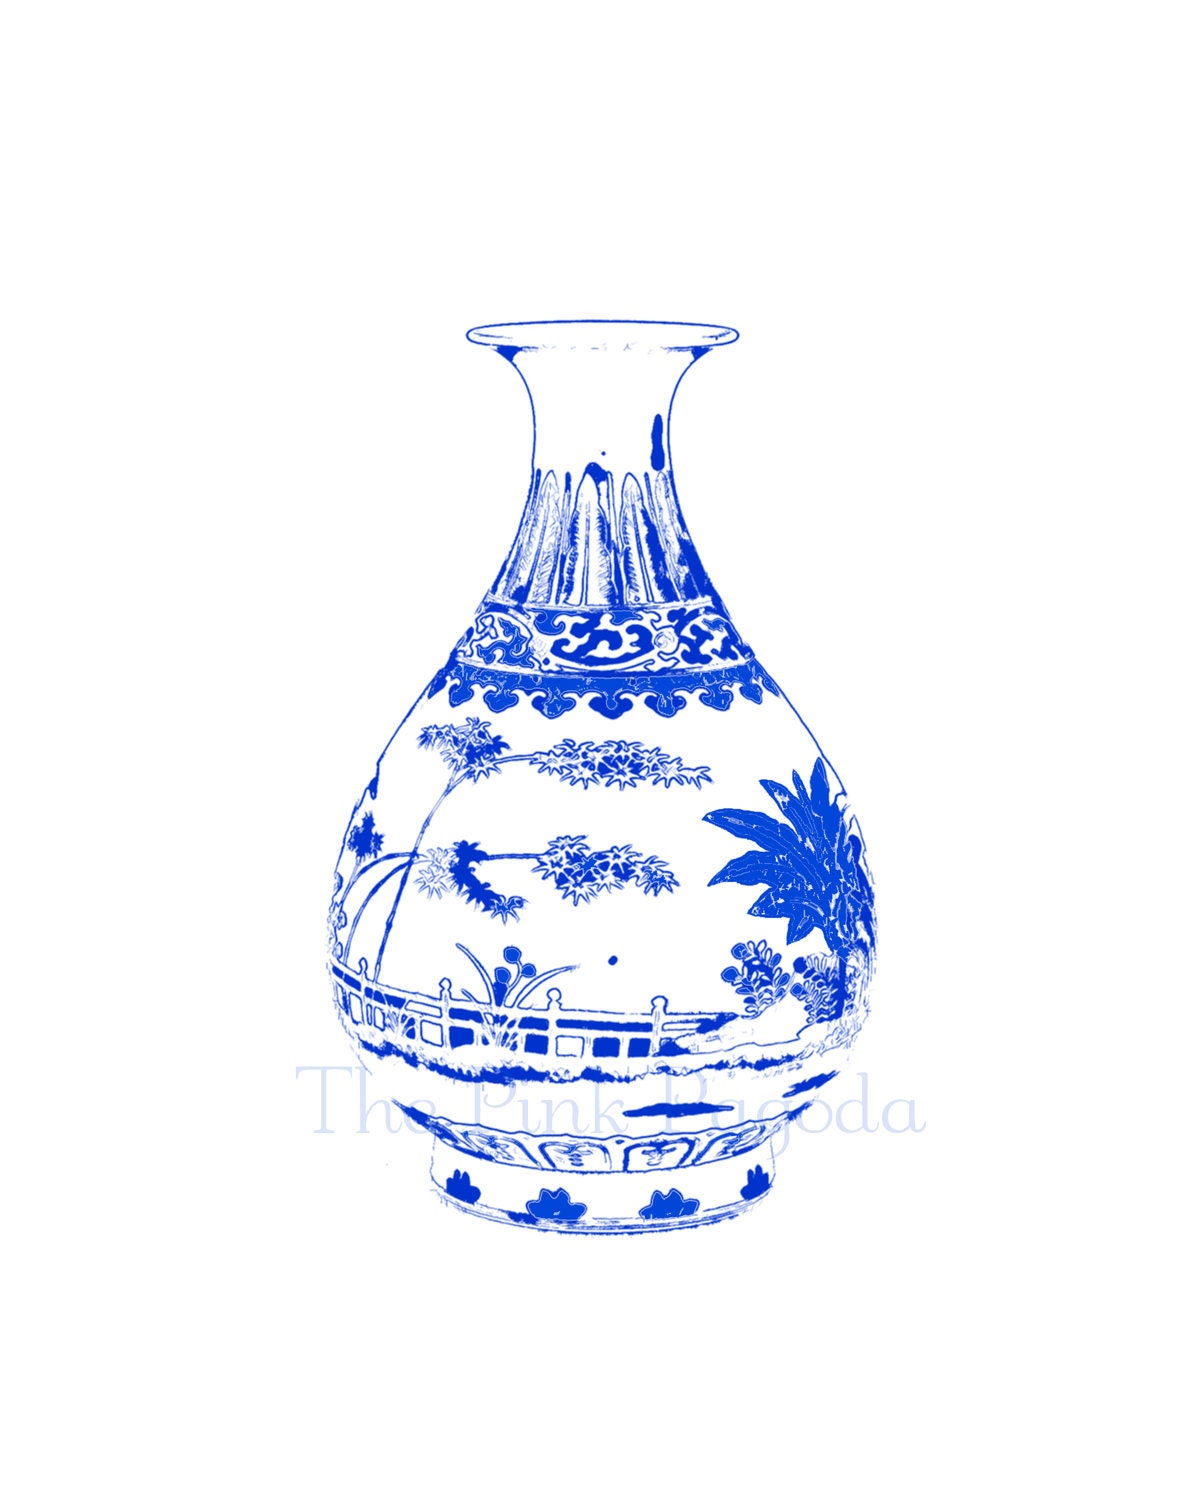 Blue and White Chinese Vase on White 8x10 Giclee - thepinkpagoda